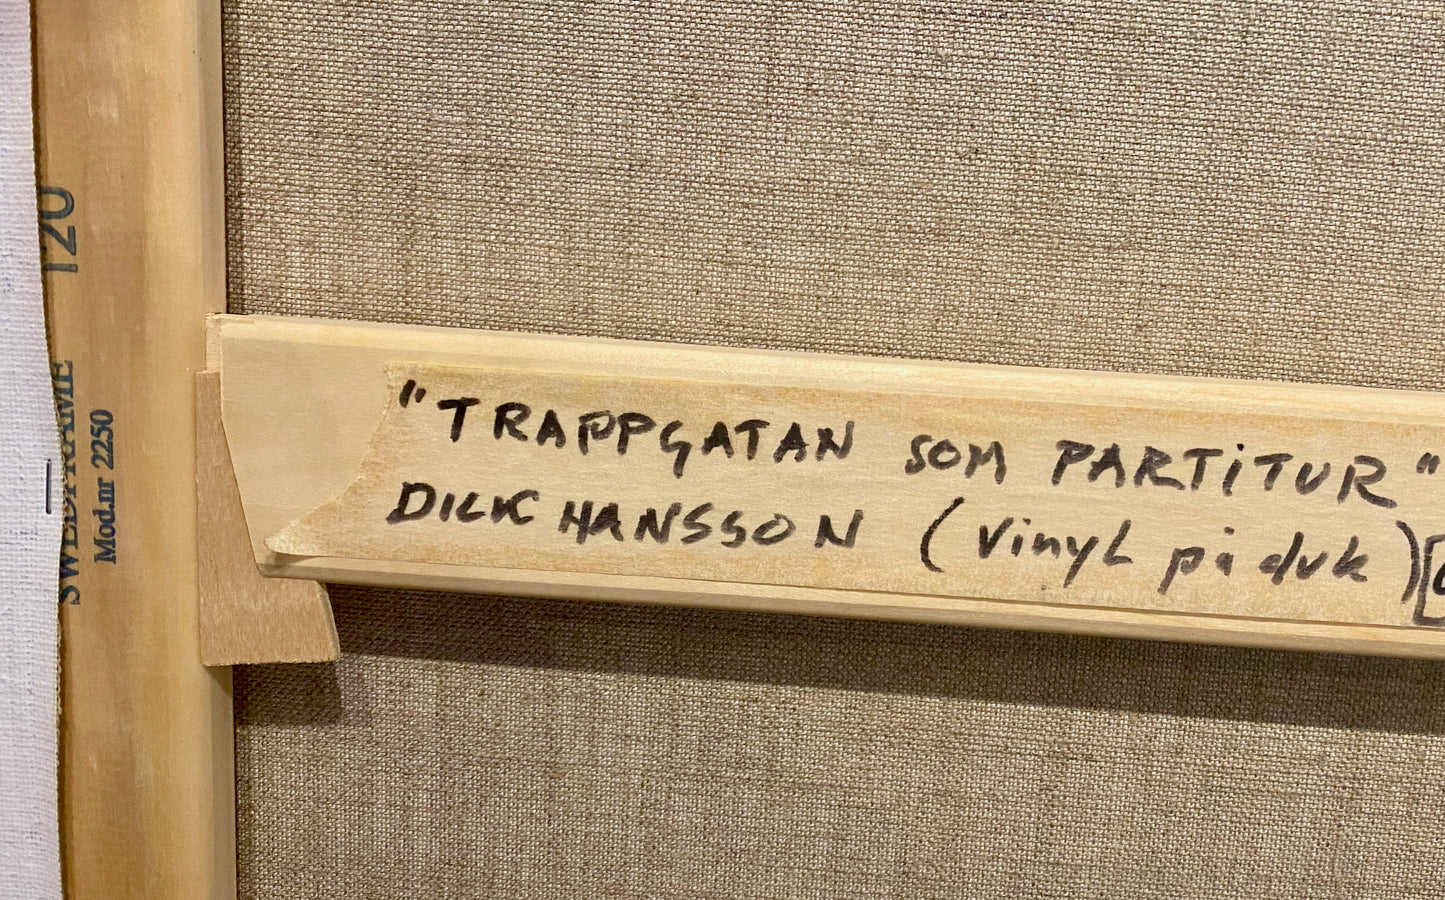 Dick Hansson - Trappgatan som partitur, acryl på duk